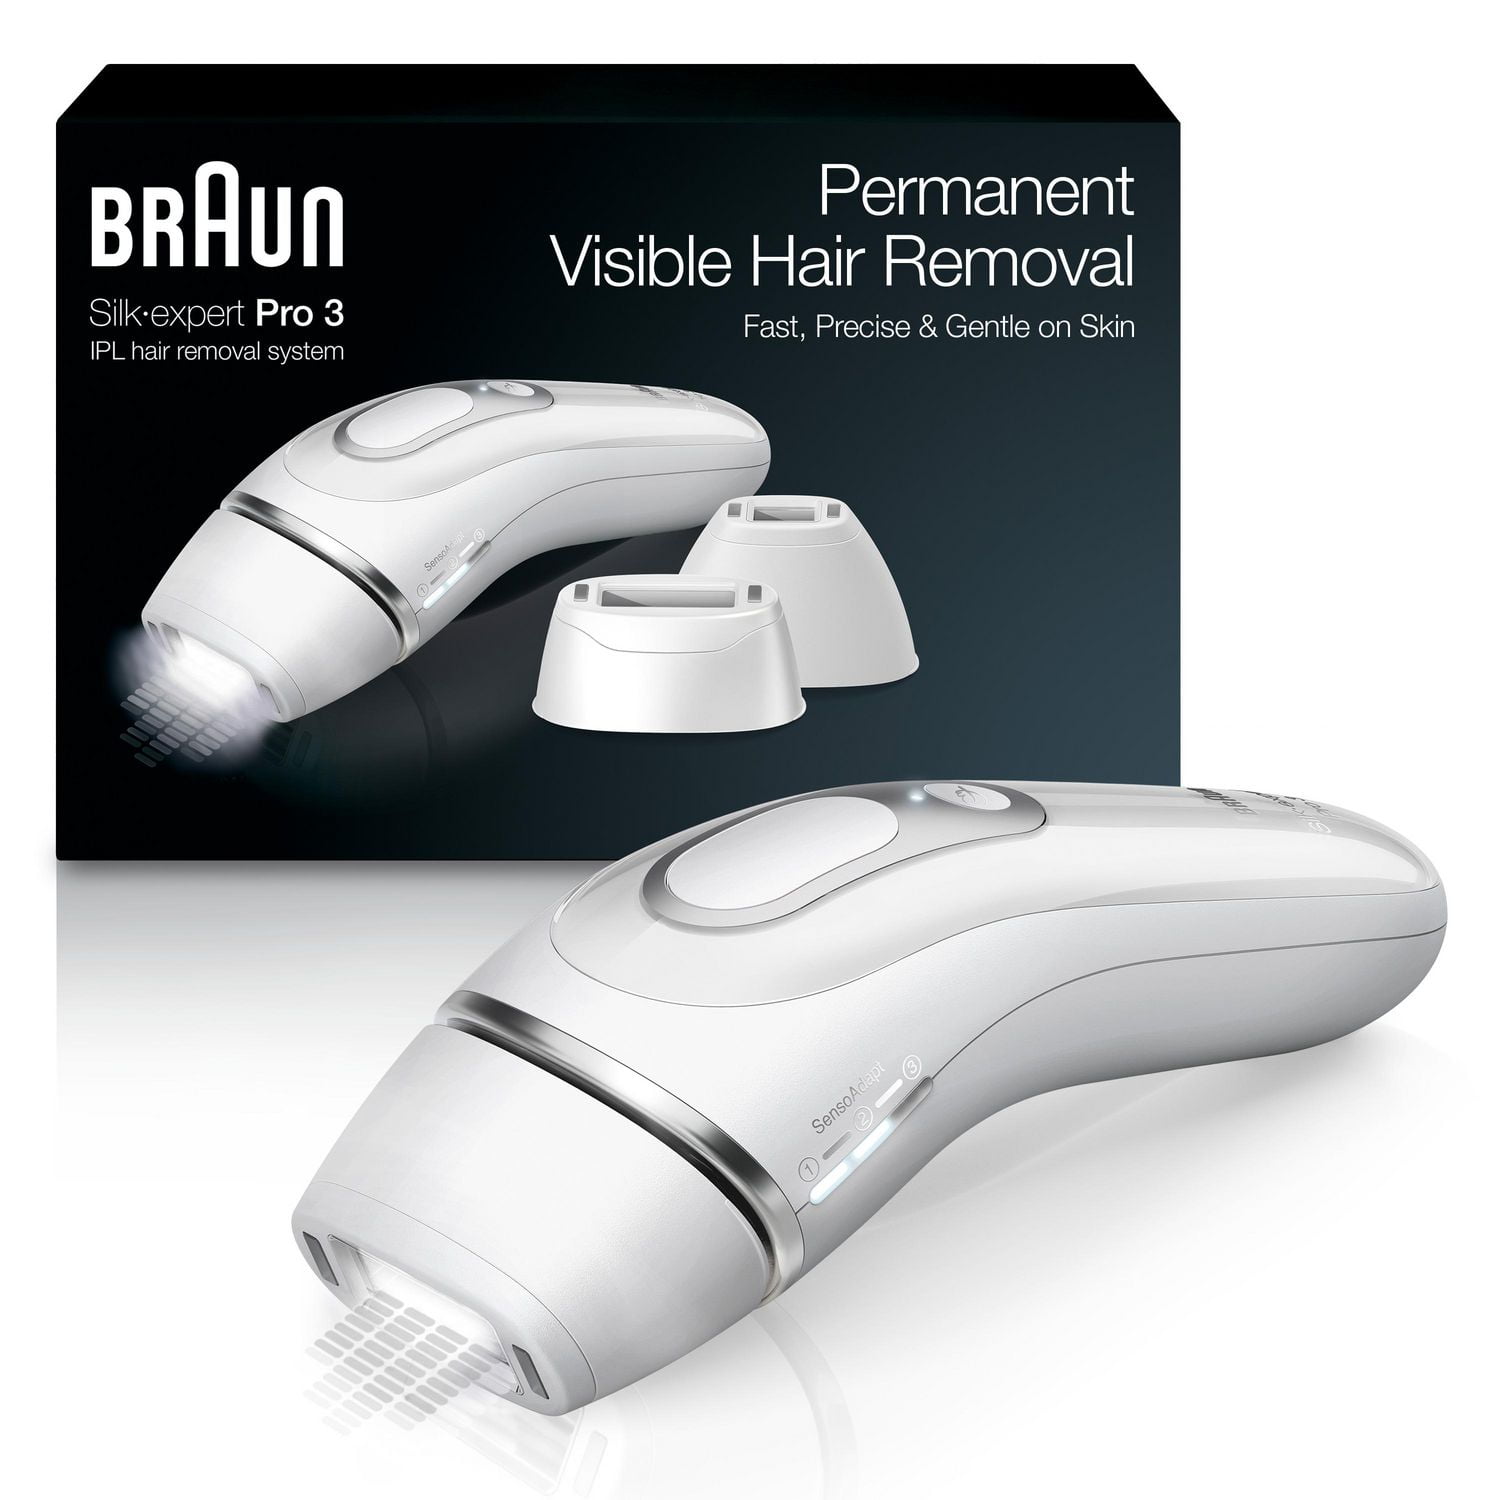 Braun IPL Silk Expert Pro 5 Visible Permanent Hair Removal for Men